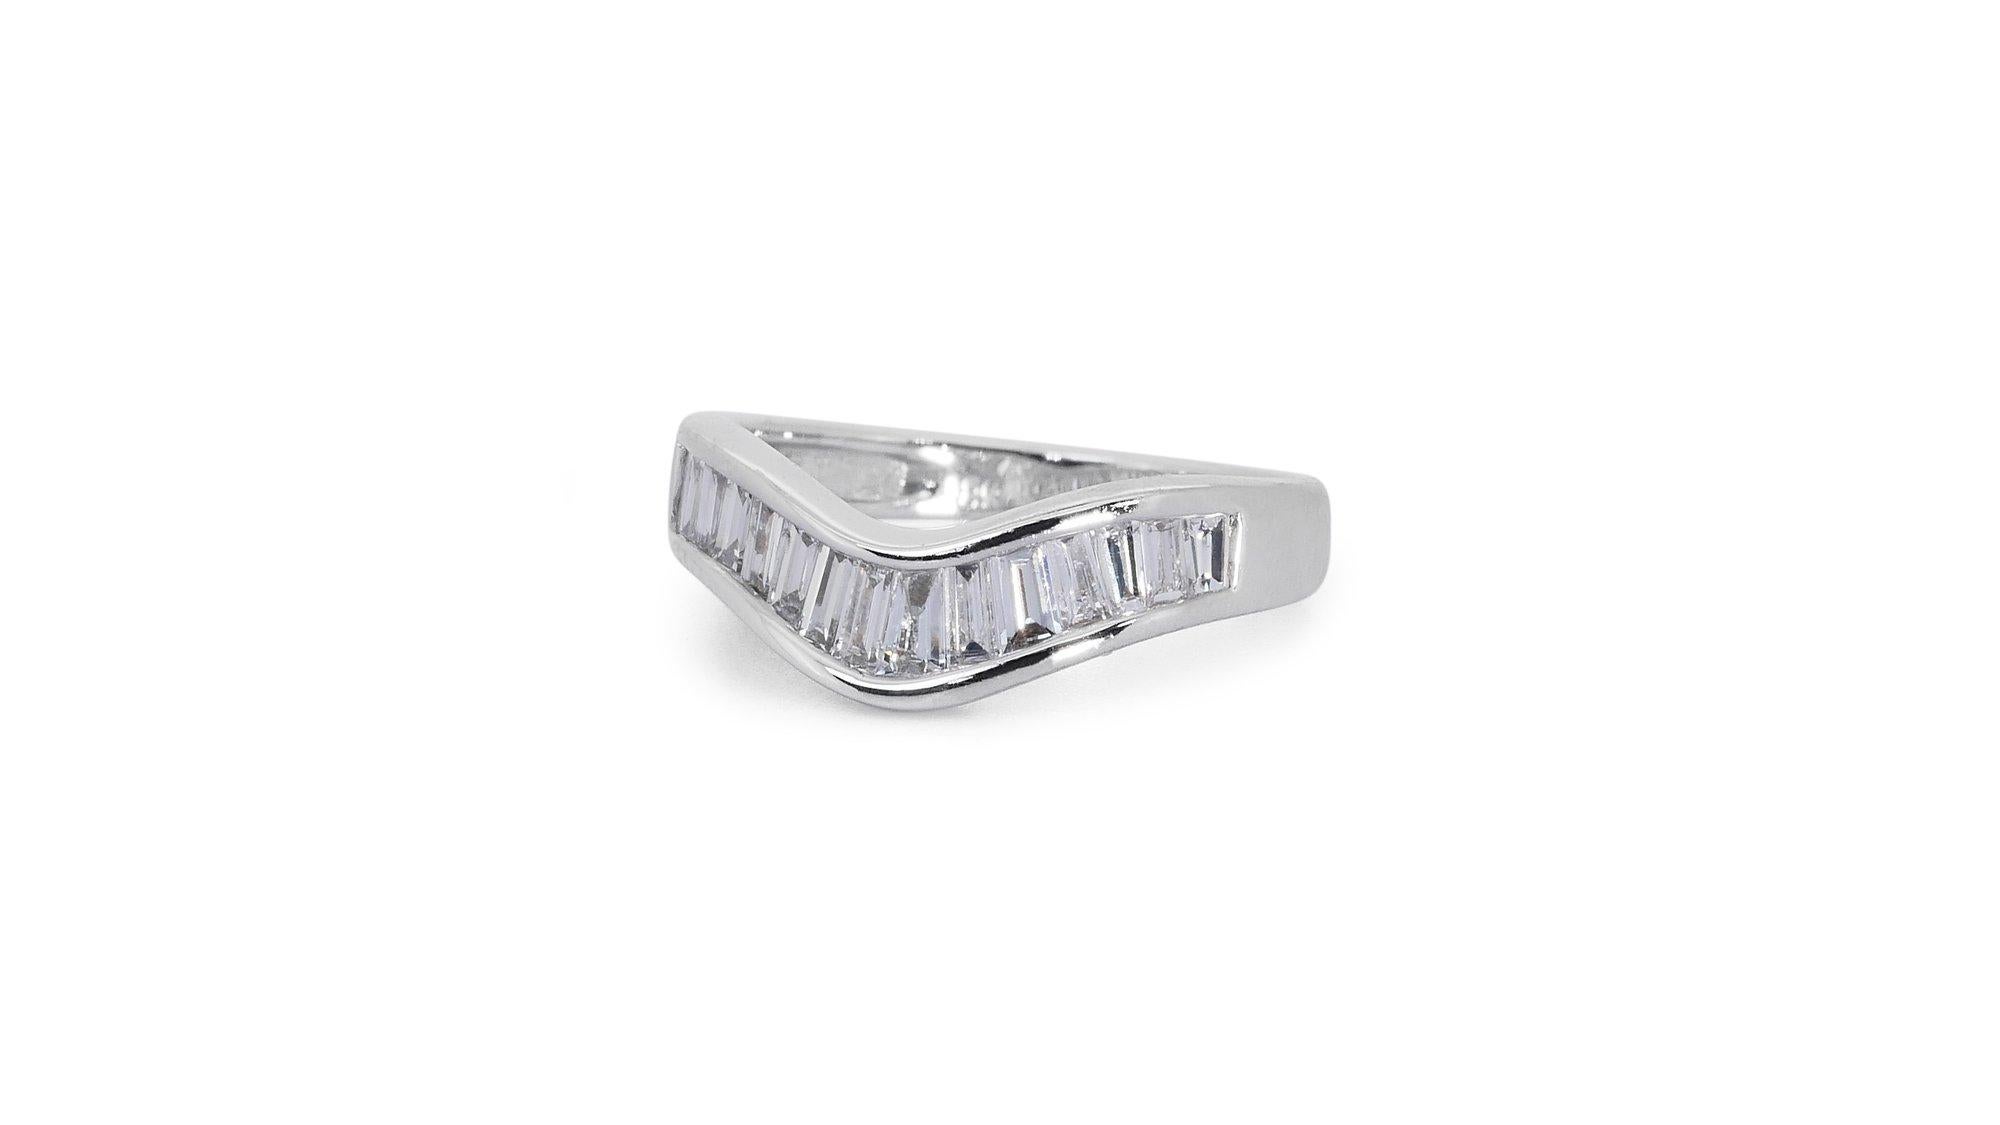 Ravishing 18k White Gold Pave Stack Ring w/ 1.2 ct Natural Diamonds IGI Cert For Sale 4